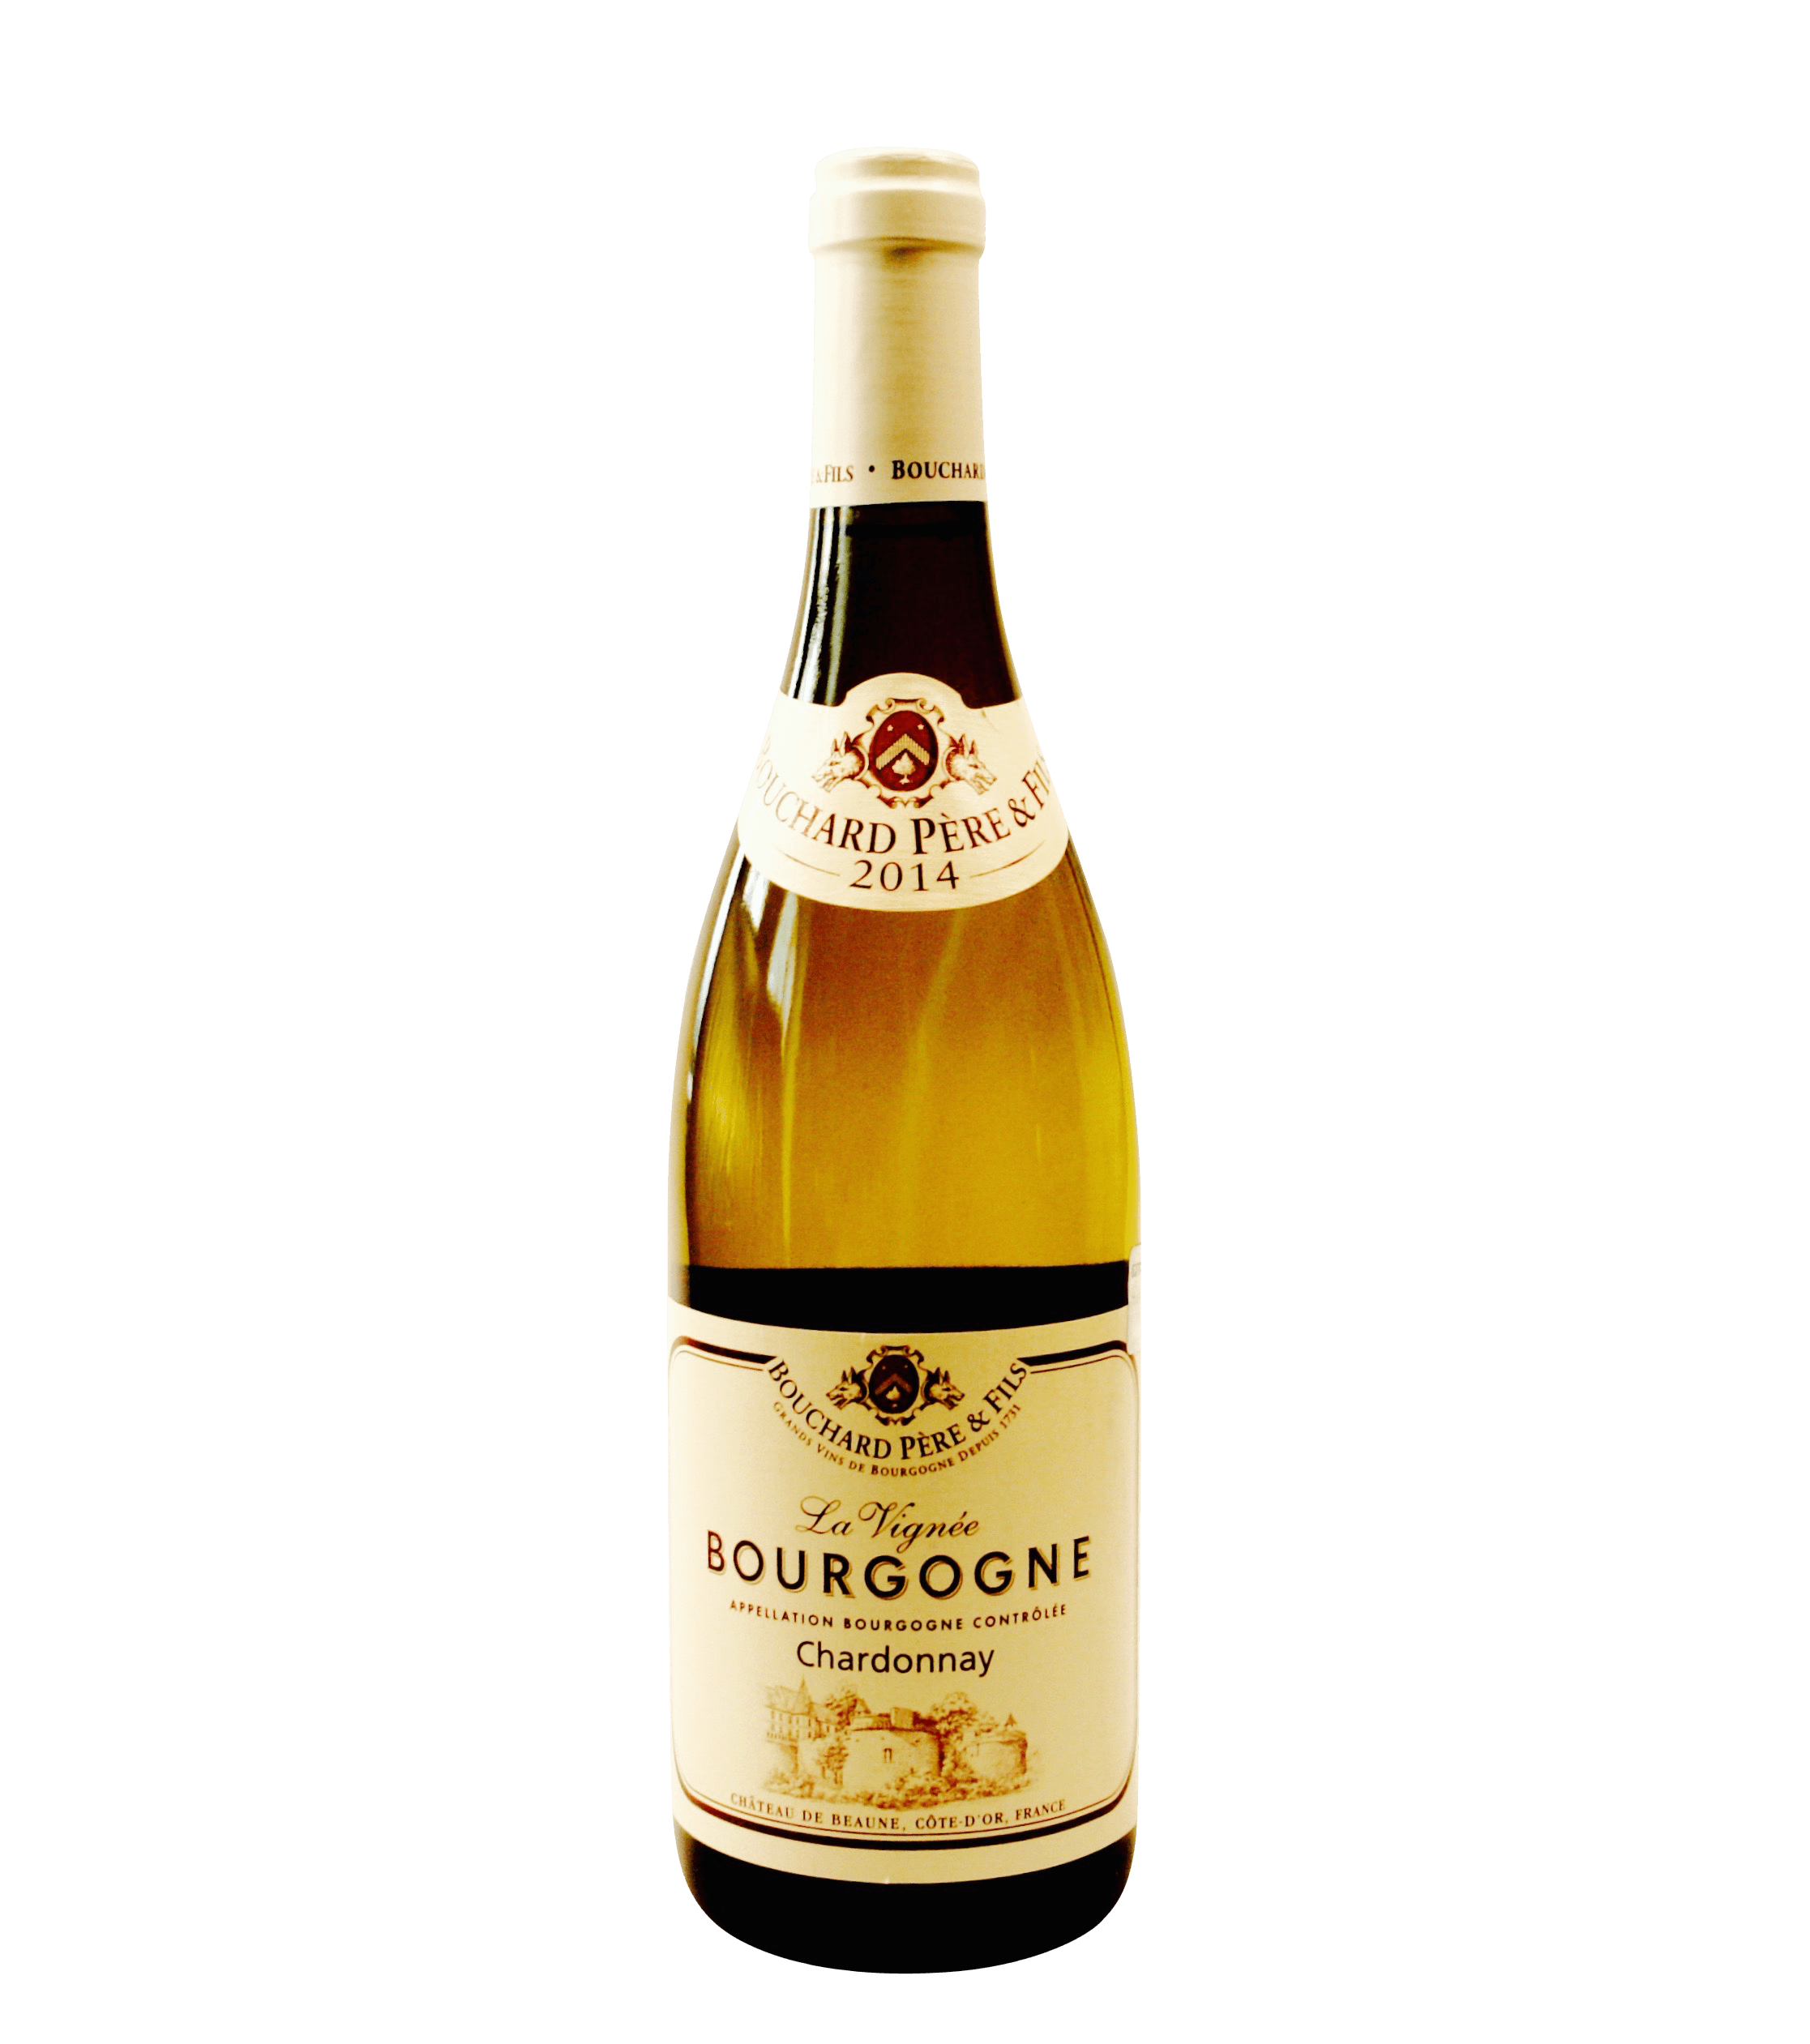 BOURGOGNE Chardonnay La Vignee BOUCHARD PERE&FILS, 2014